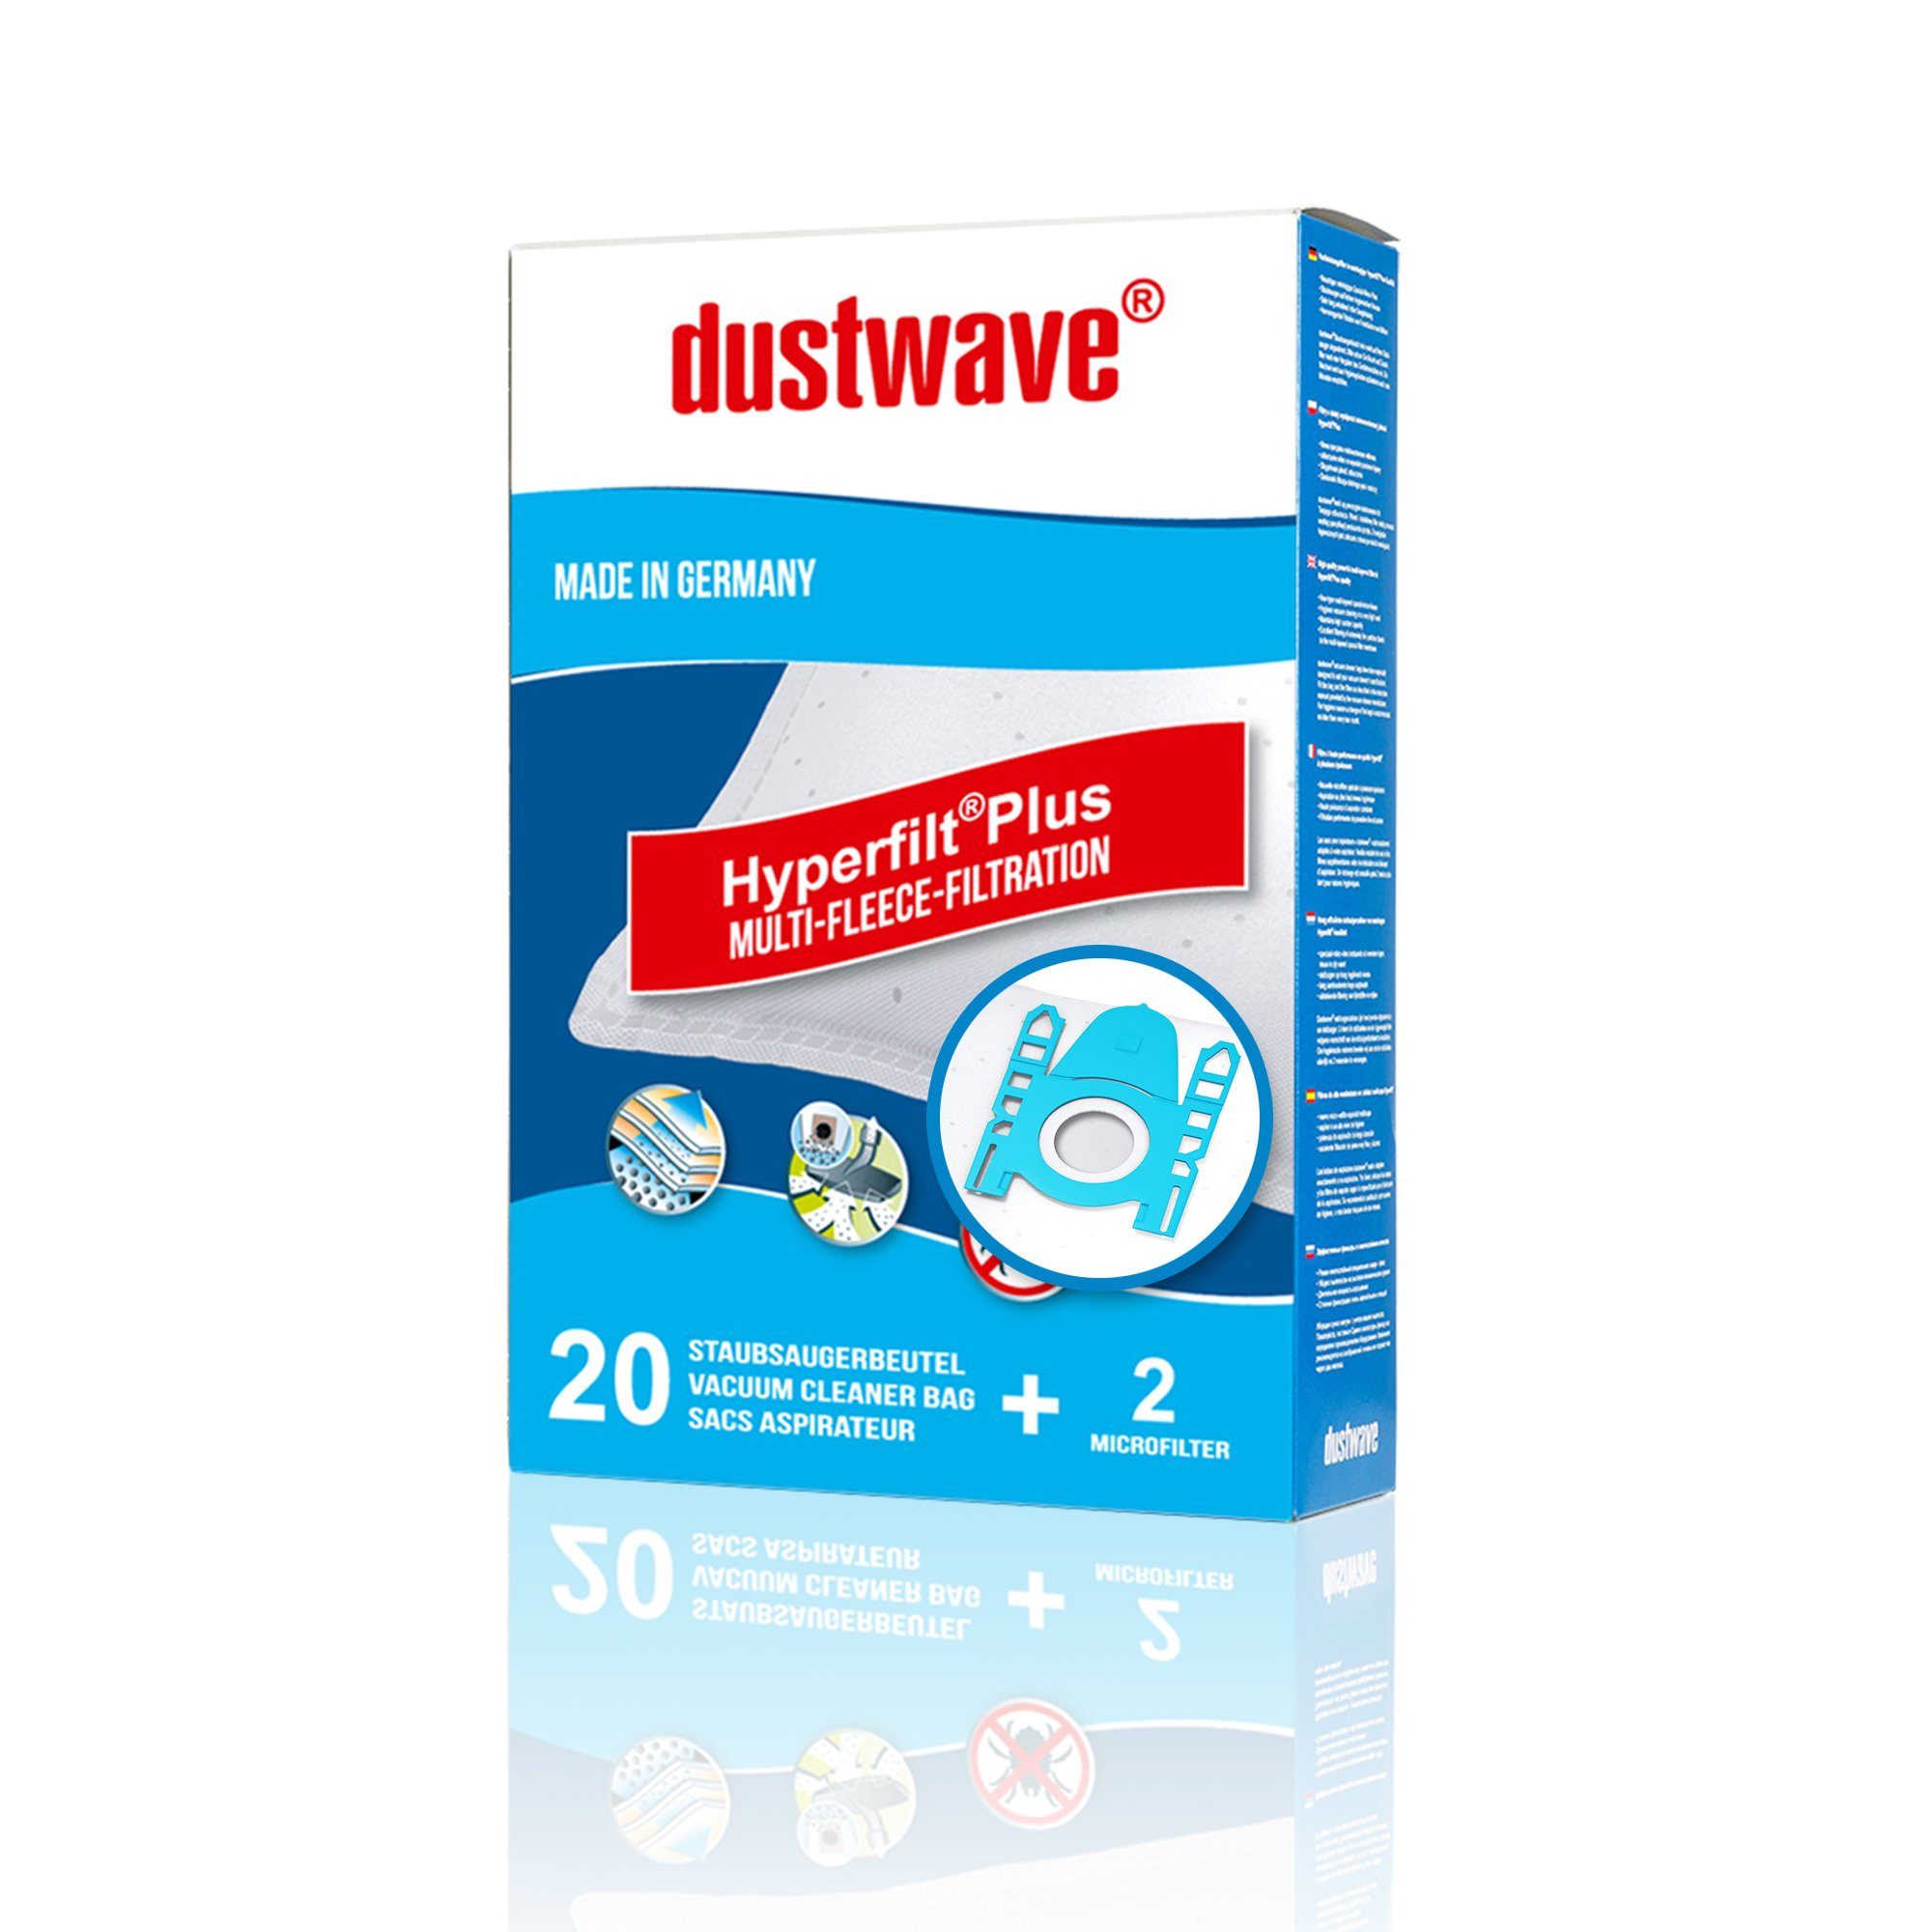 Dustwave Staubsaugerbeutel Megapack, passend für AmazonBasics S11, 20 St., Megapack, 20 Staubsaugerbeutel + 2 Hepa-Filter (ca. 15x15cm - zuschneidbar)